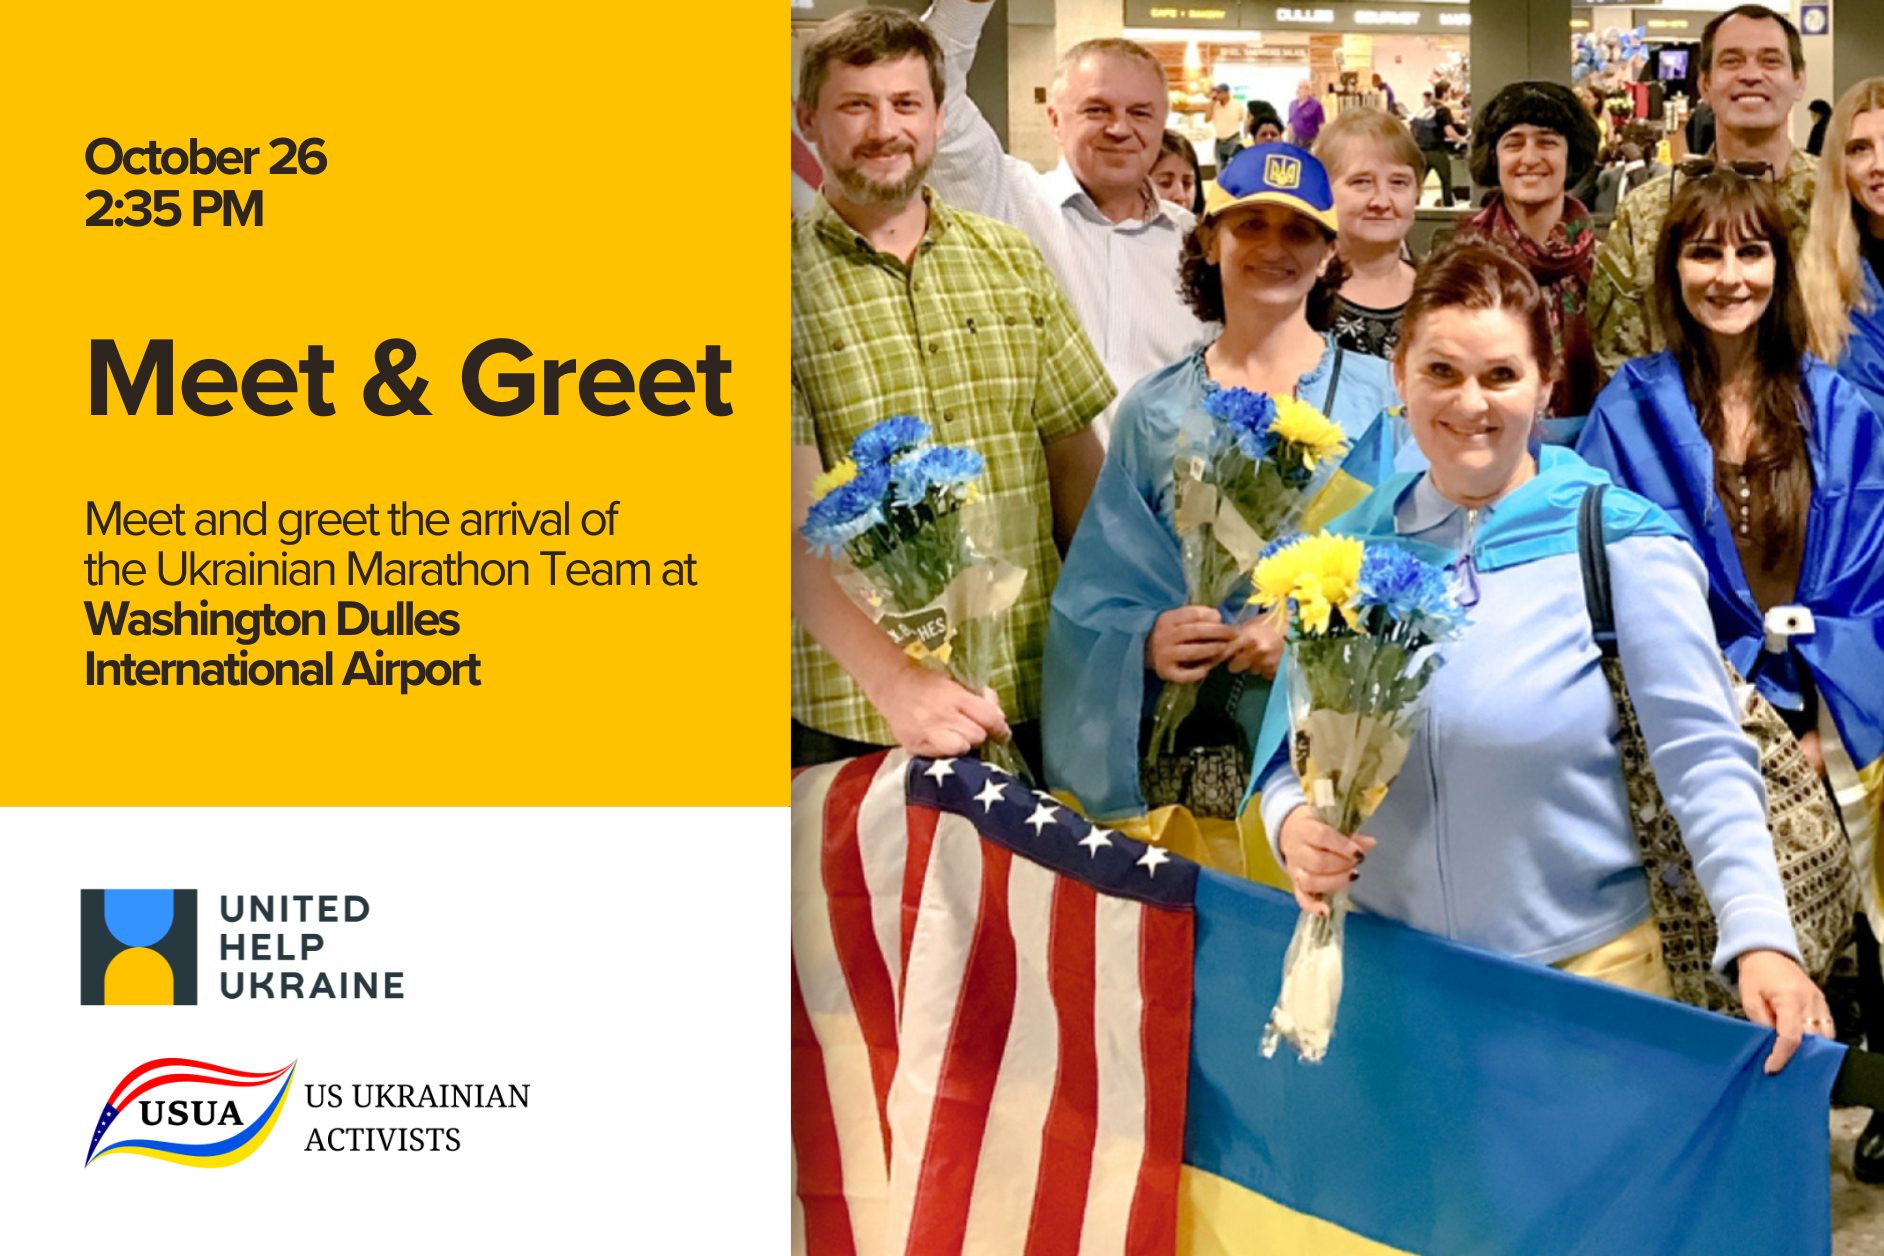 Meet and greet the arrival of the Ukrainian Marathon Team in IAD